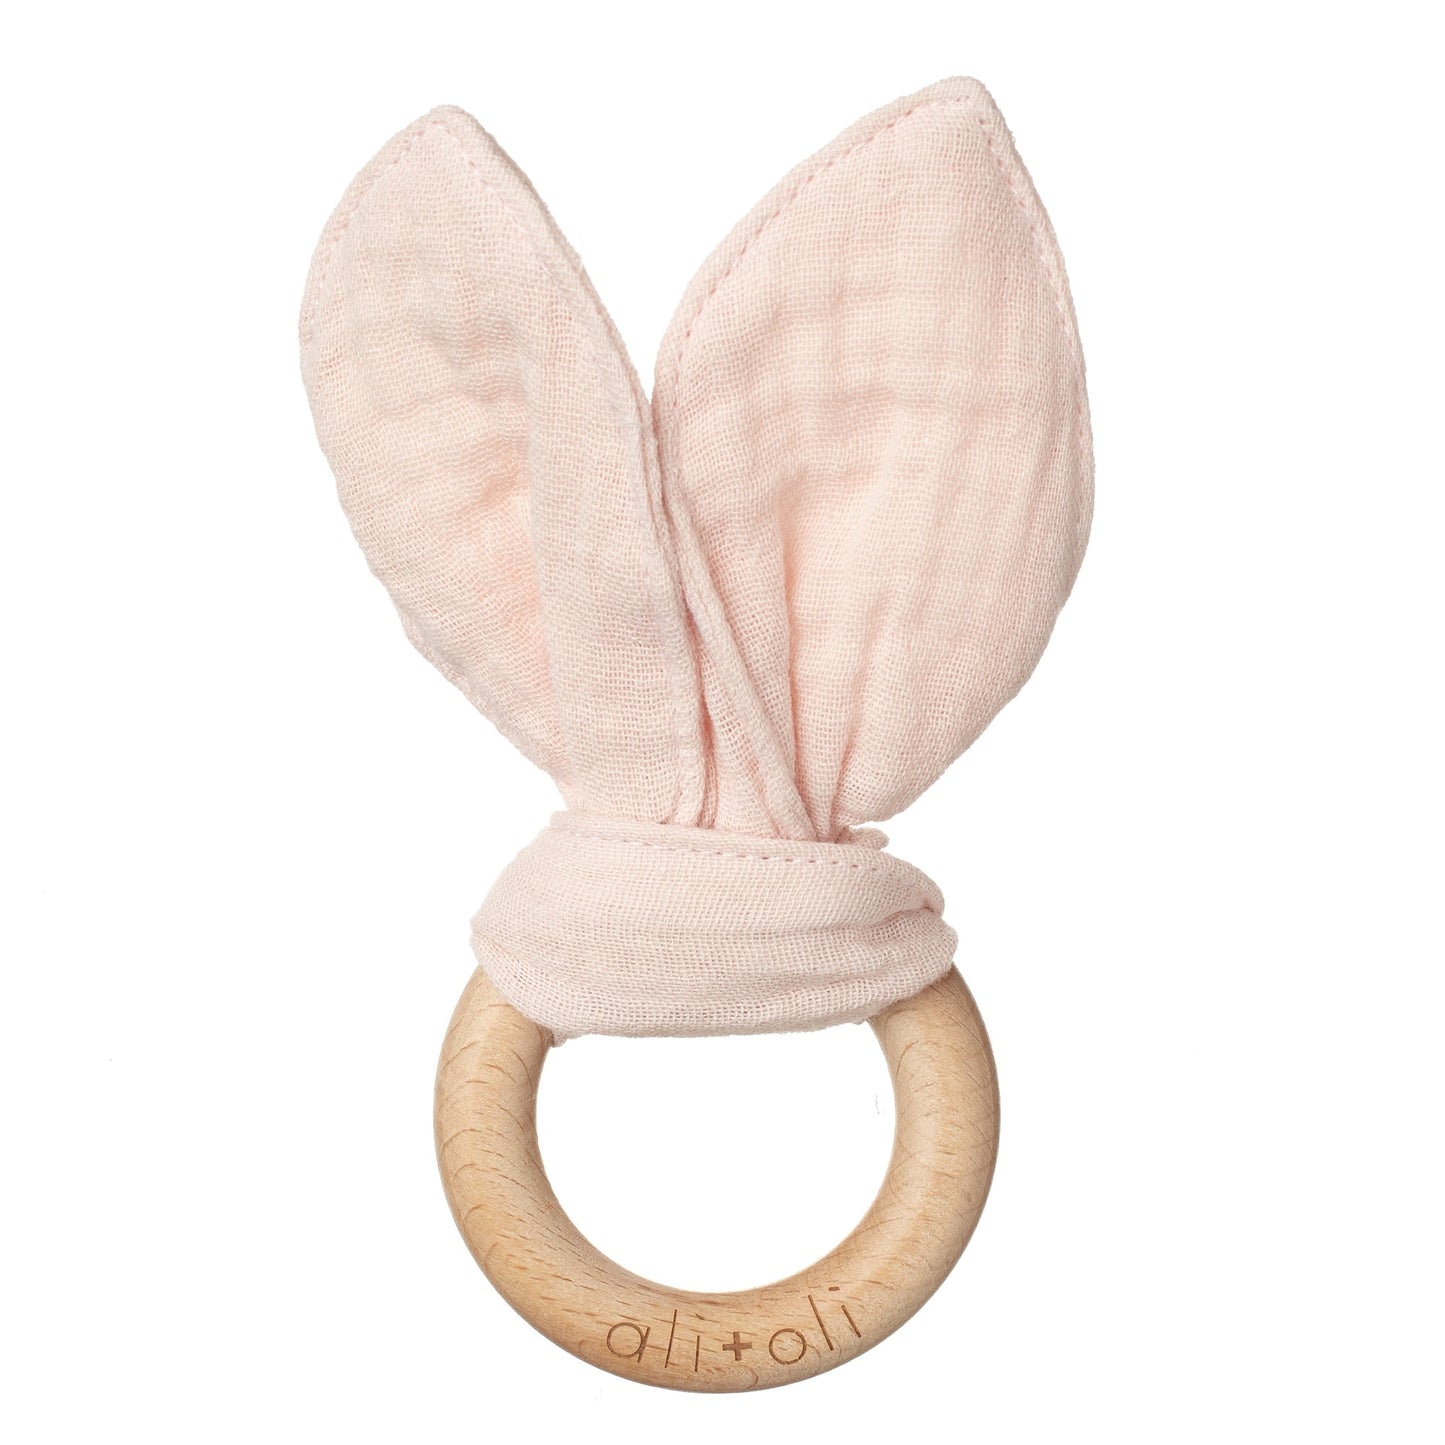 Ali+Oli Crinkle Bunny Ears Wooden Ring Teething Toy for Baby